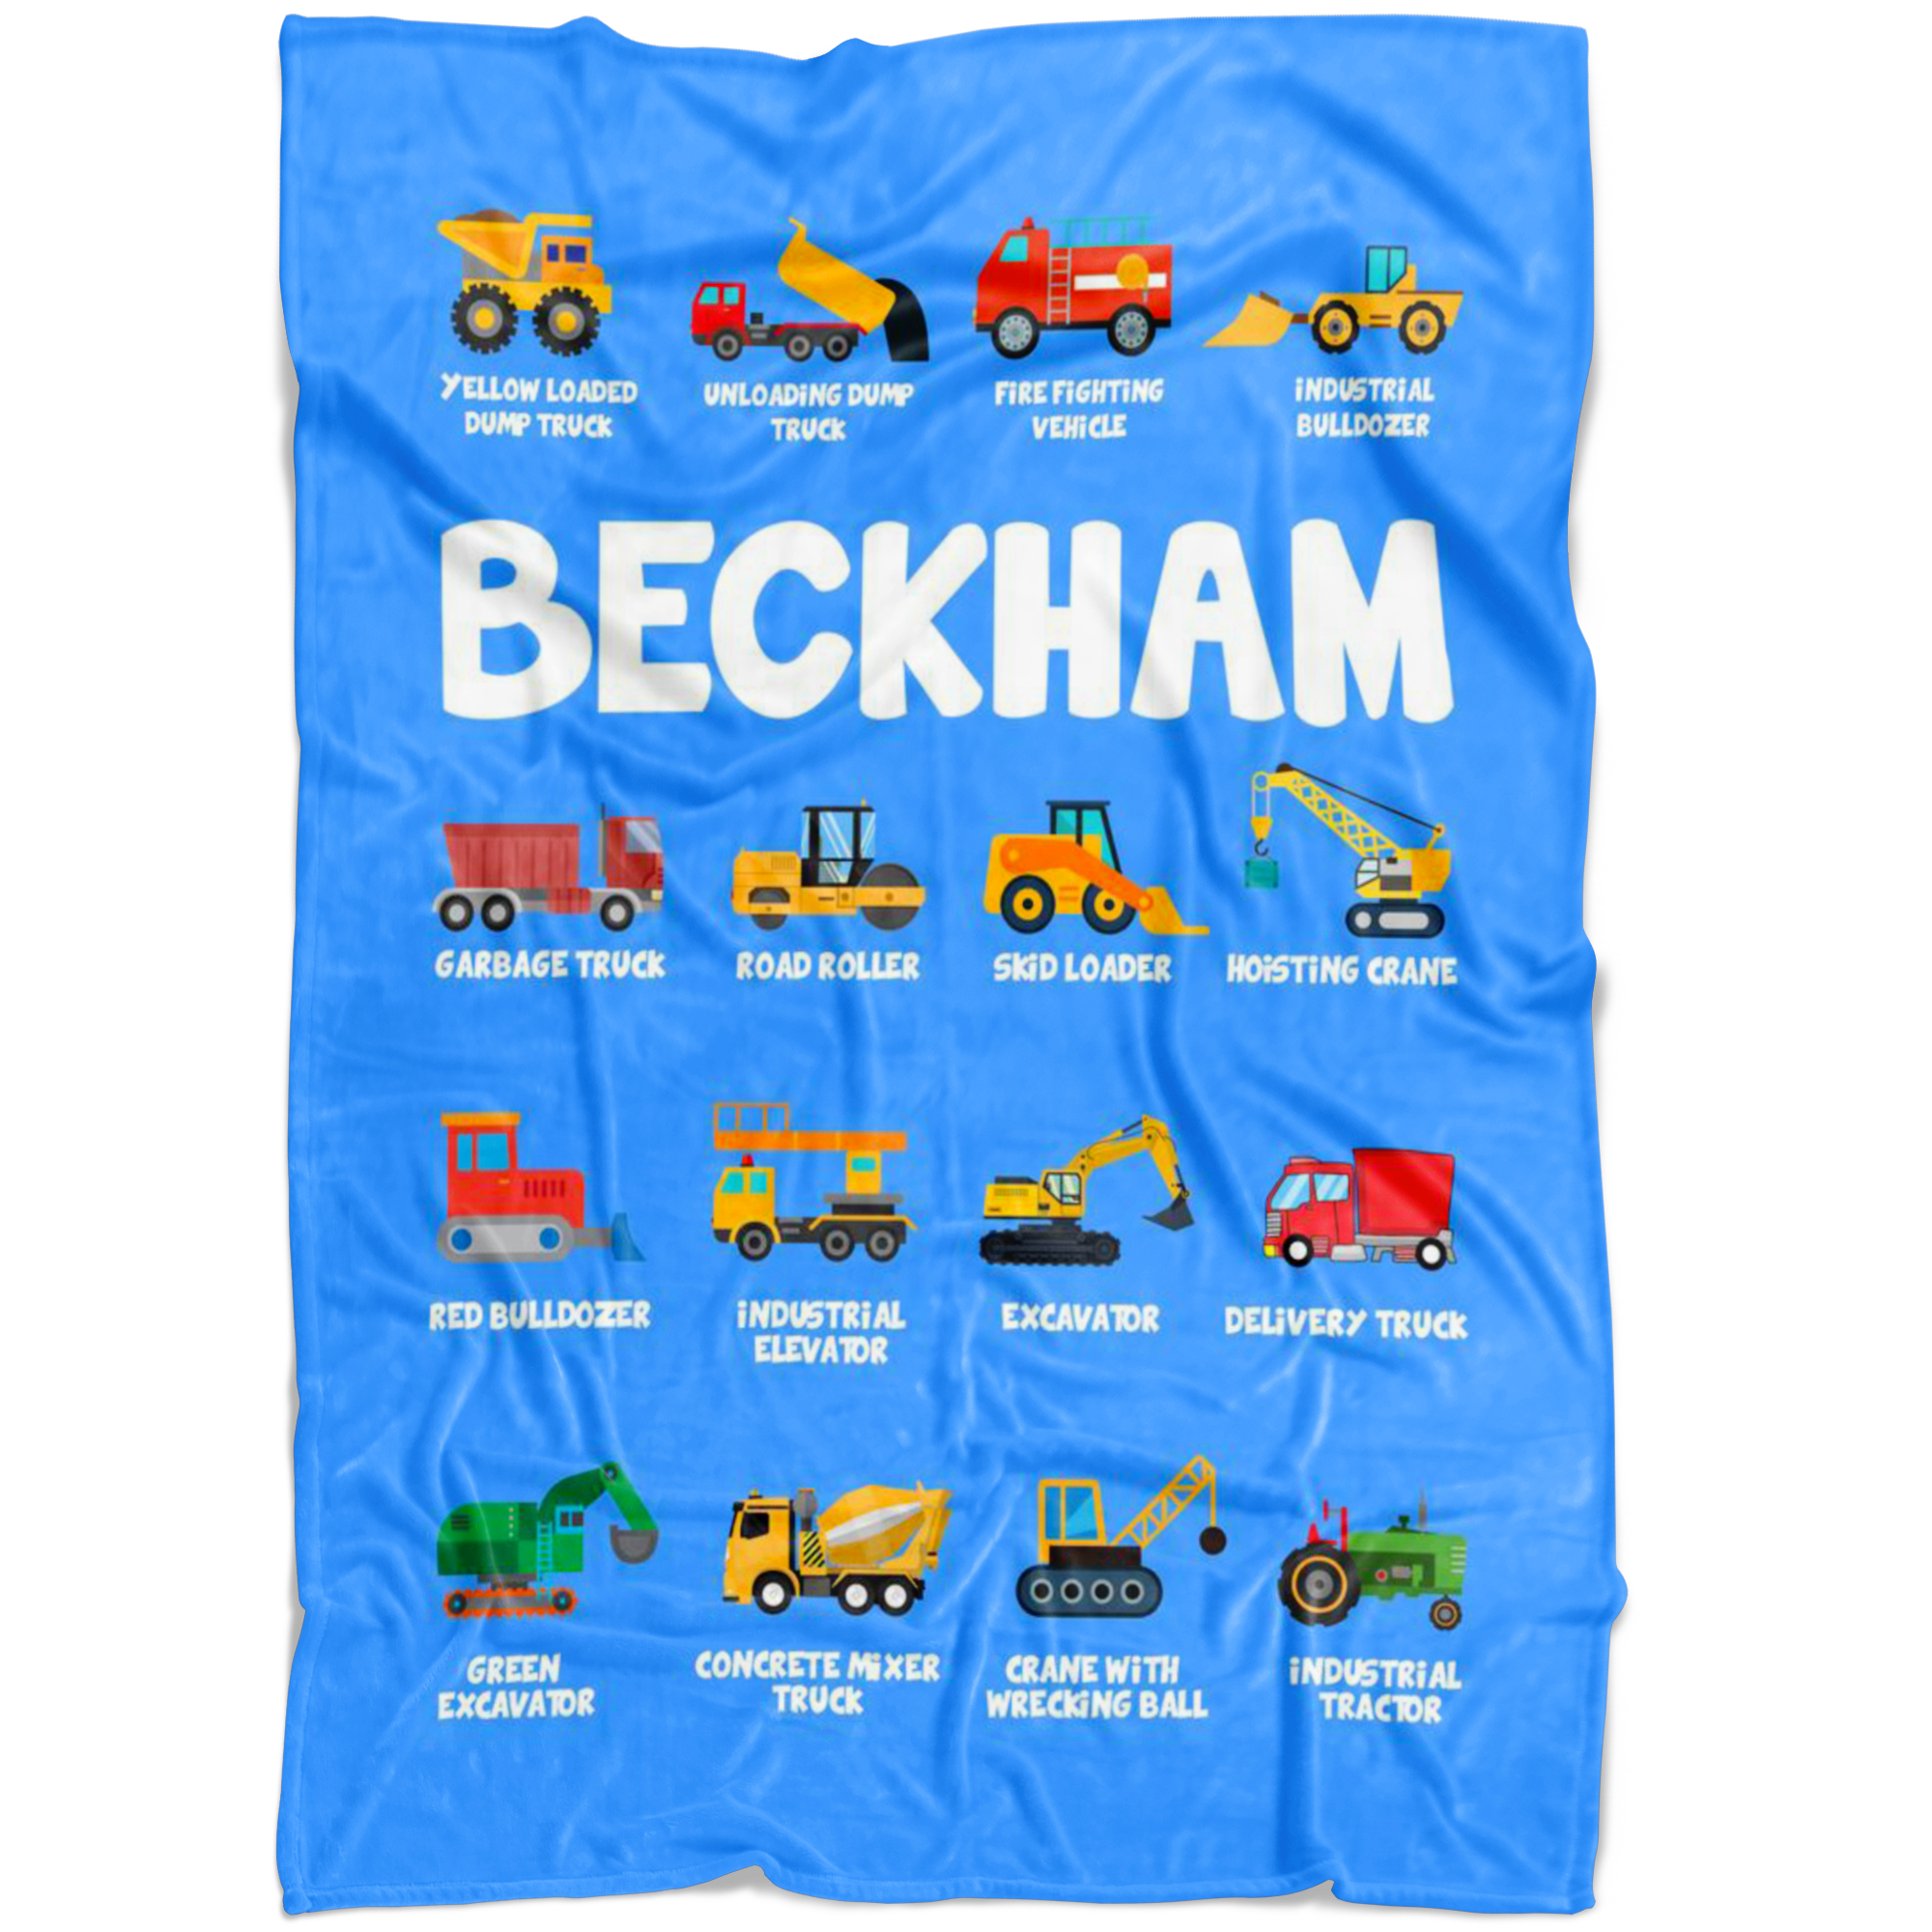 BECKHAM Construction Blanket Blue